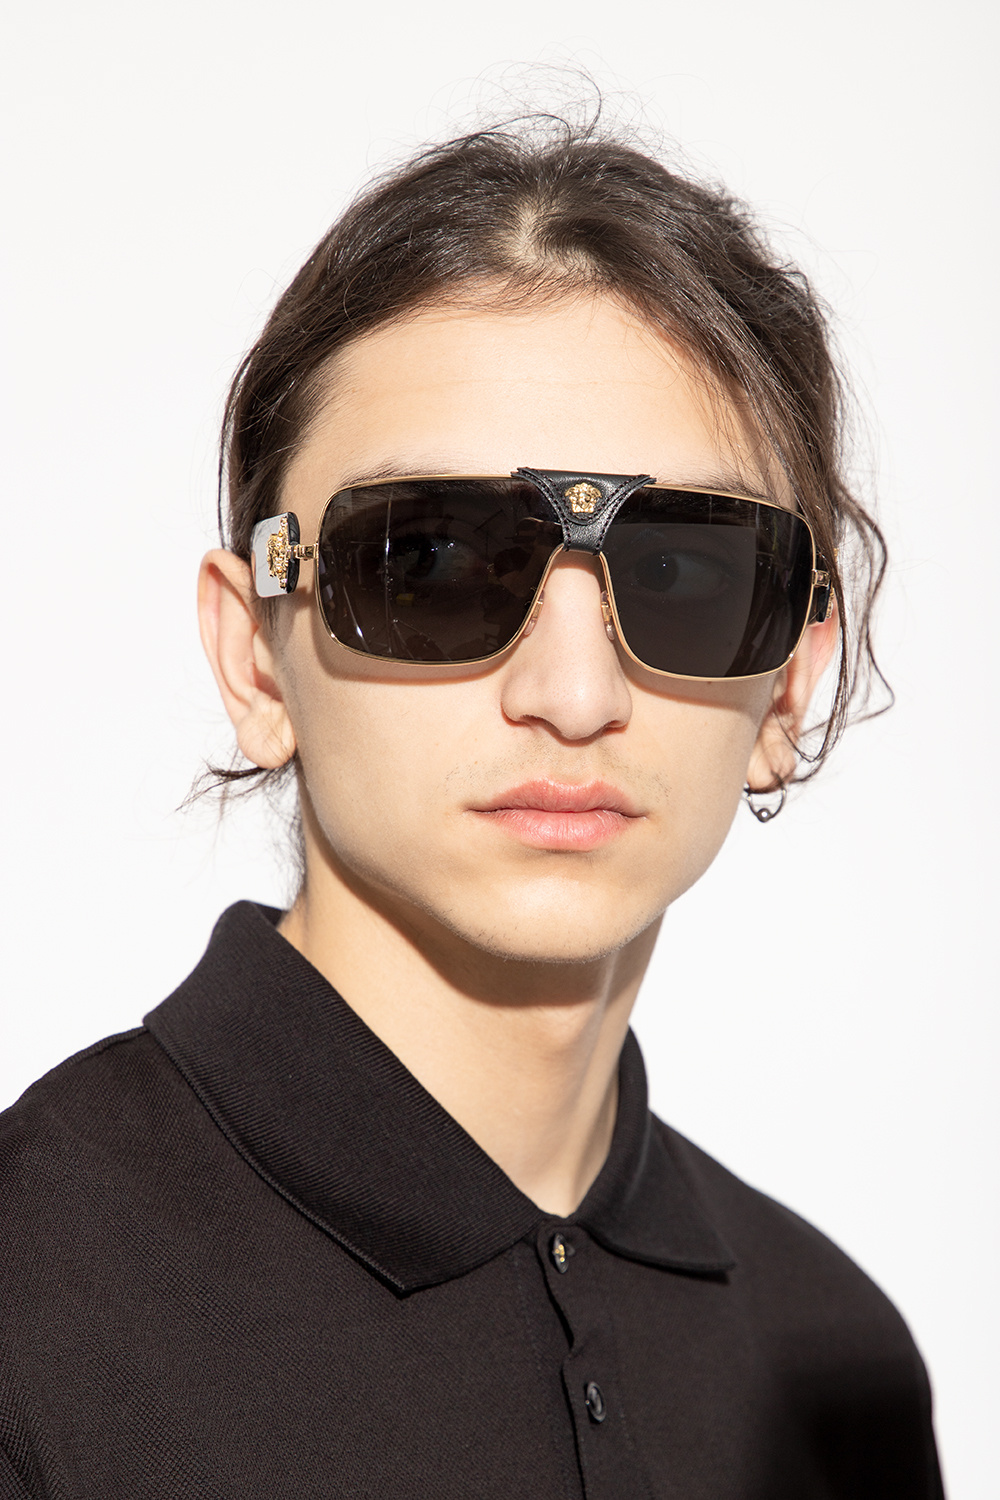 Versace Miu Miu Eyewear Eyewear Collection sunglasses